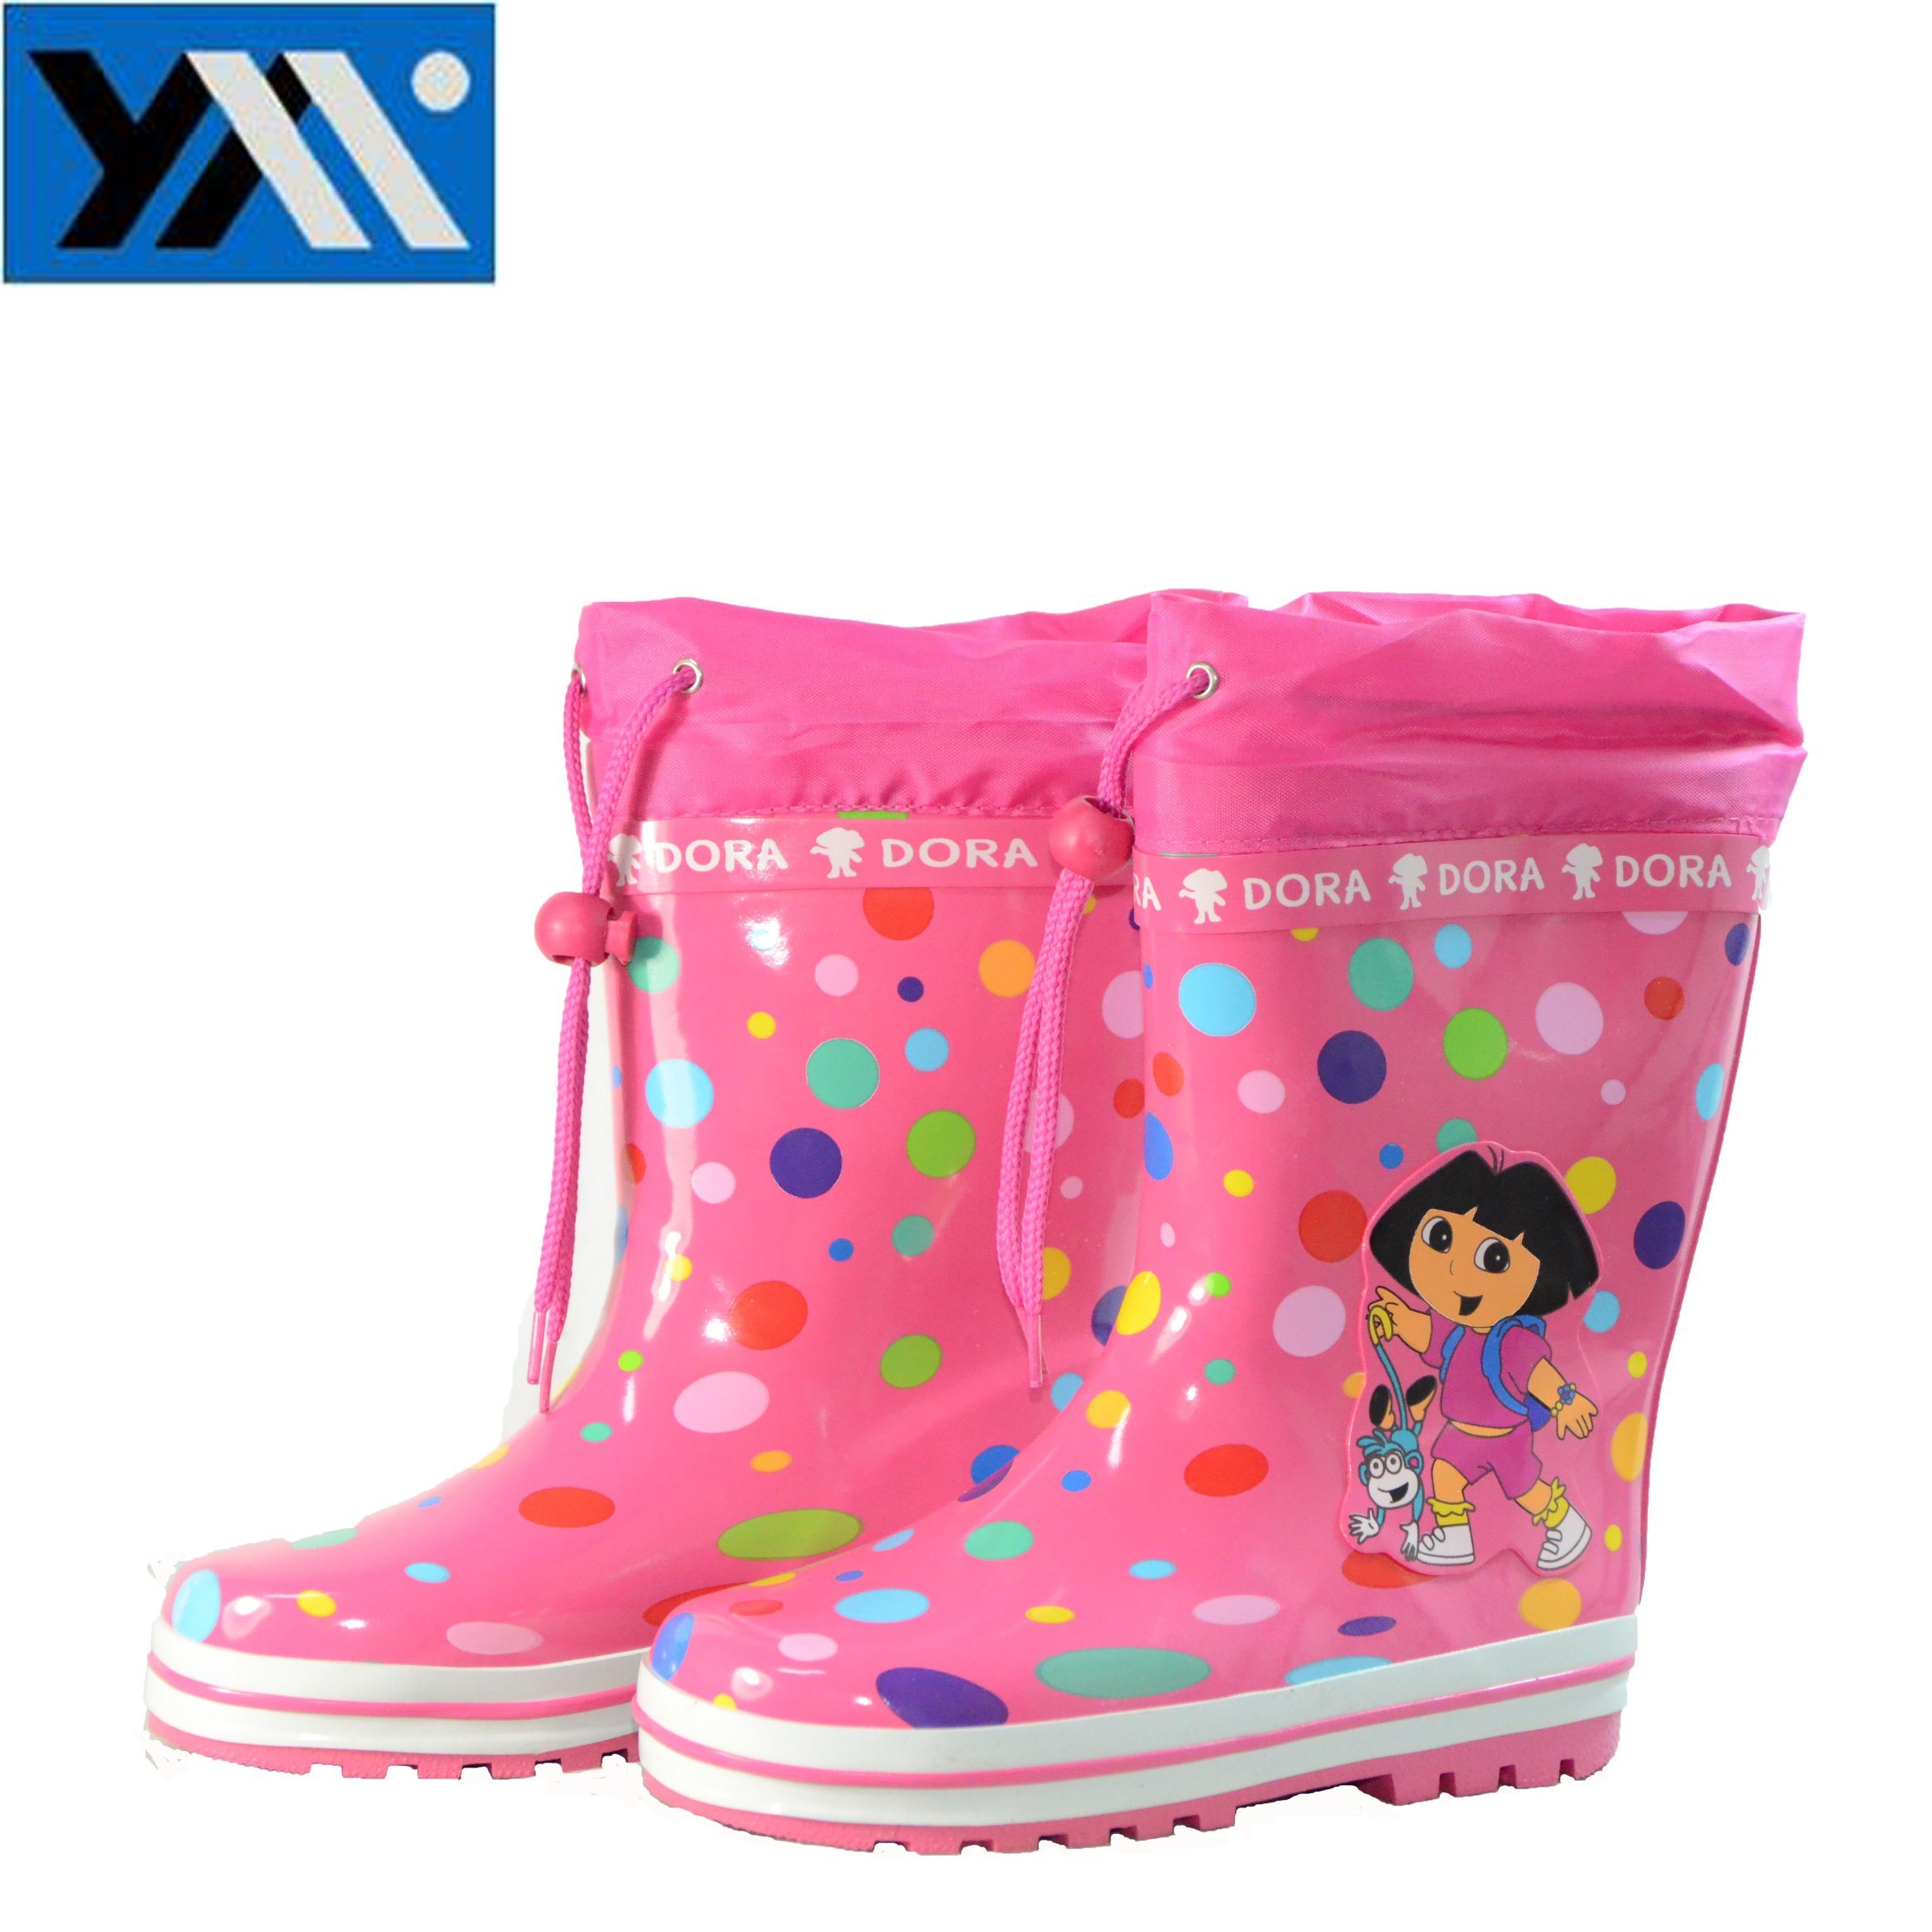 Colorful Kid Rubber Rain Boots with Cartoon Dora